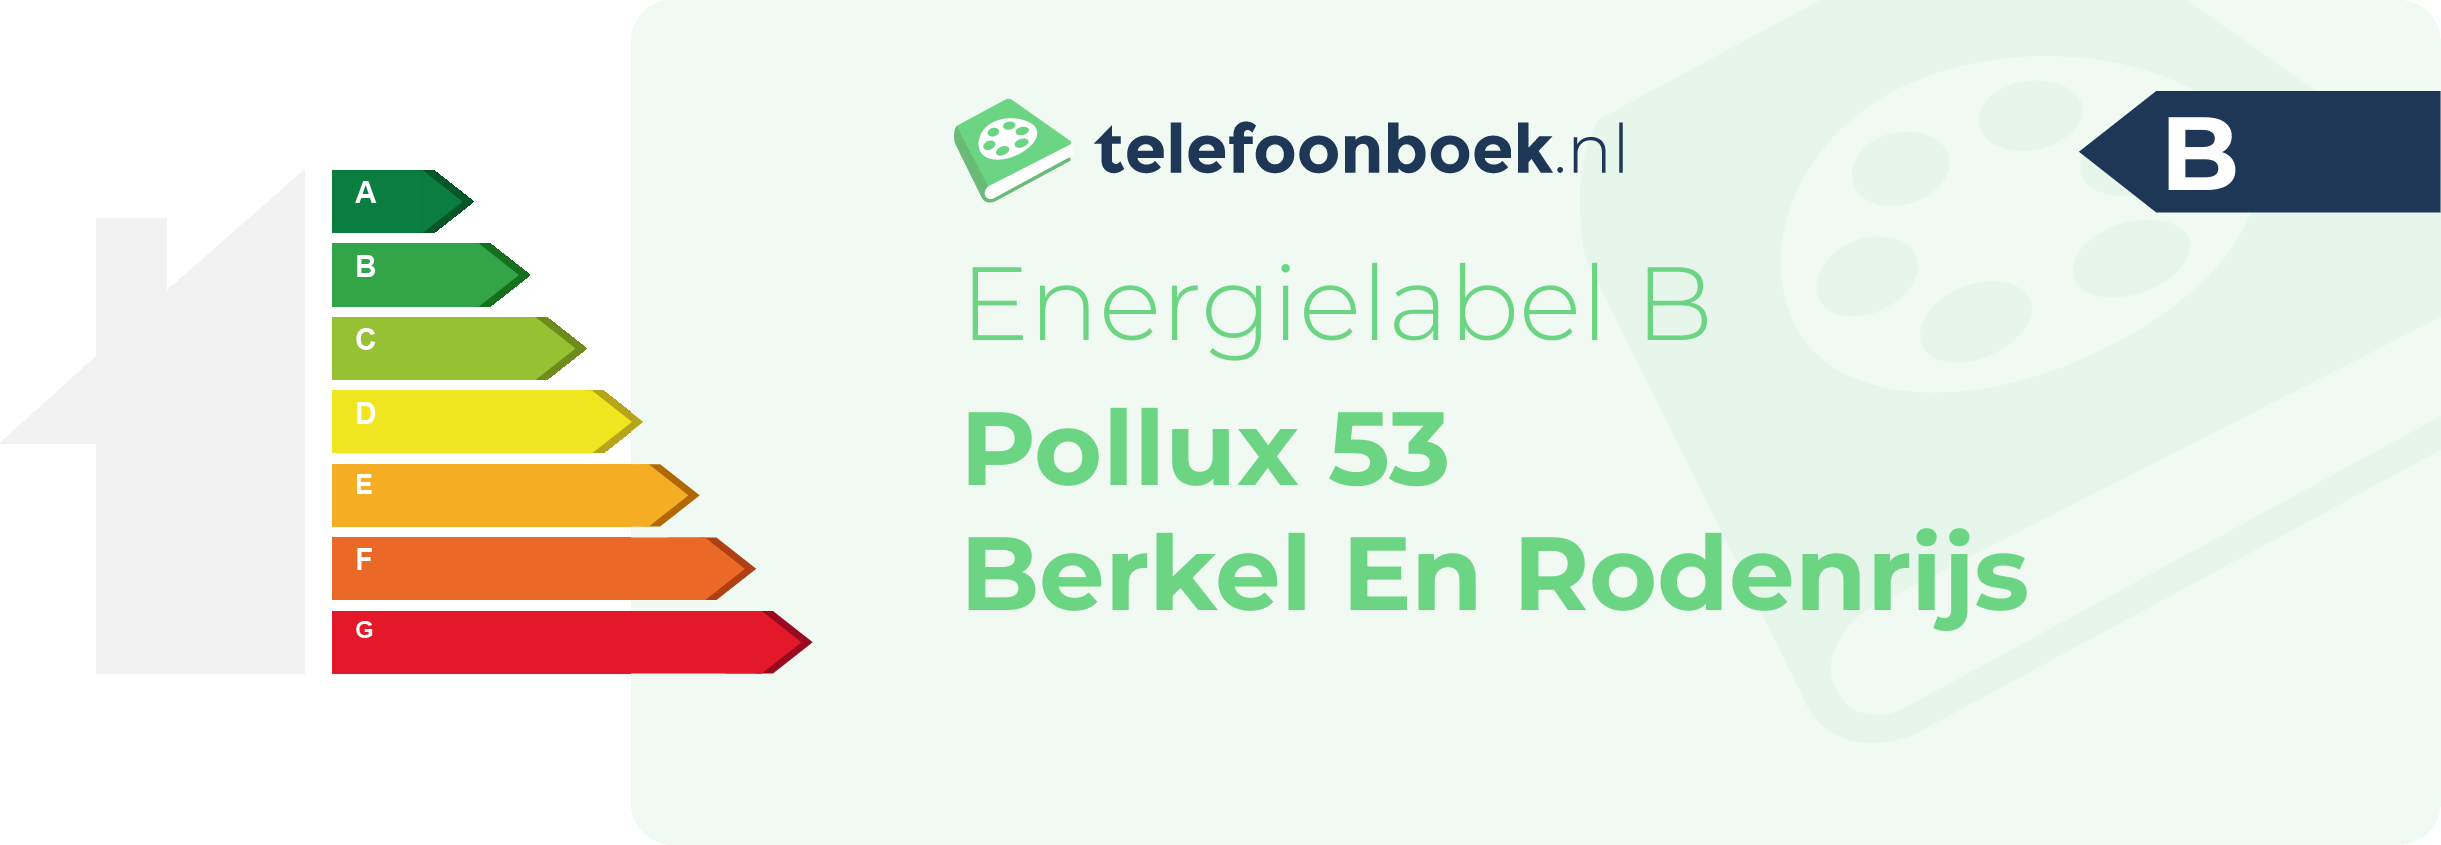 Energielabel Pollux 53 Berkel En Rodenrijs